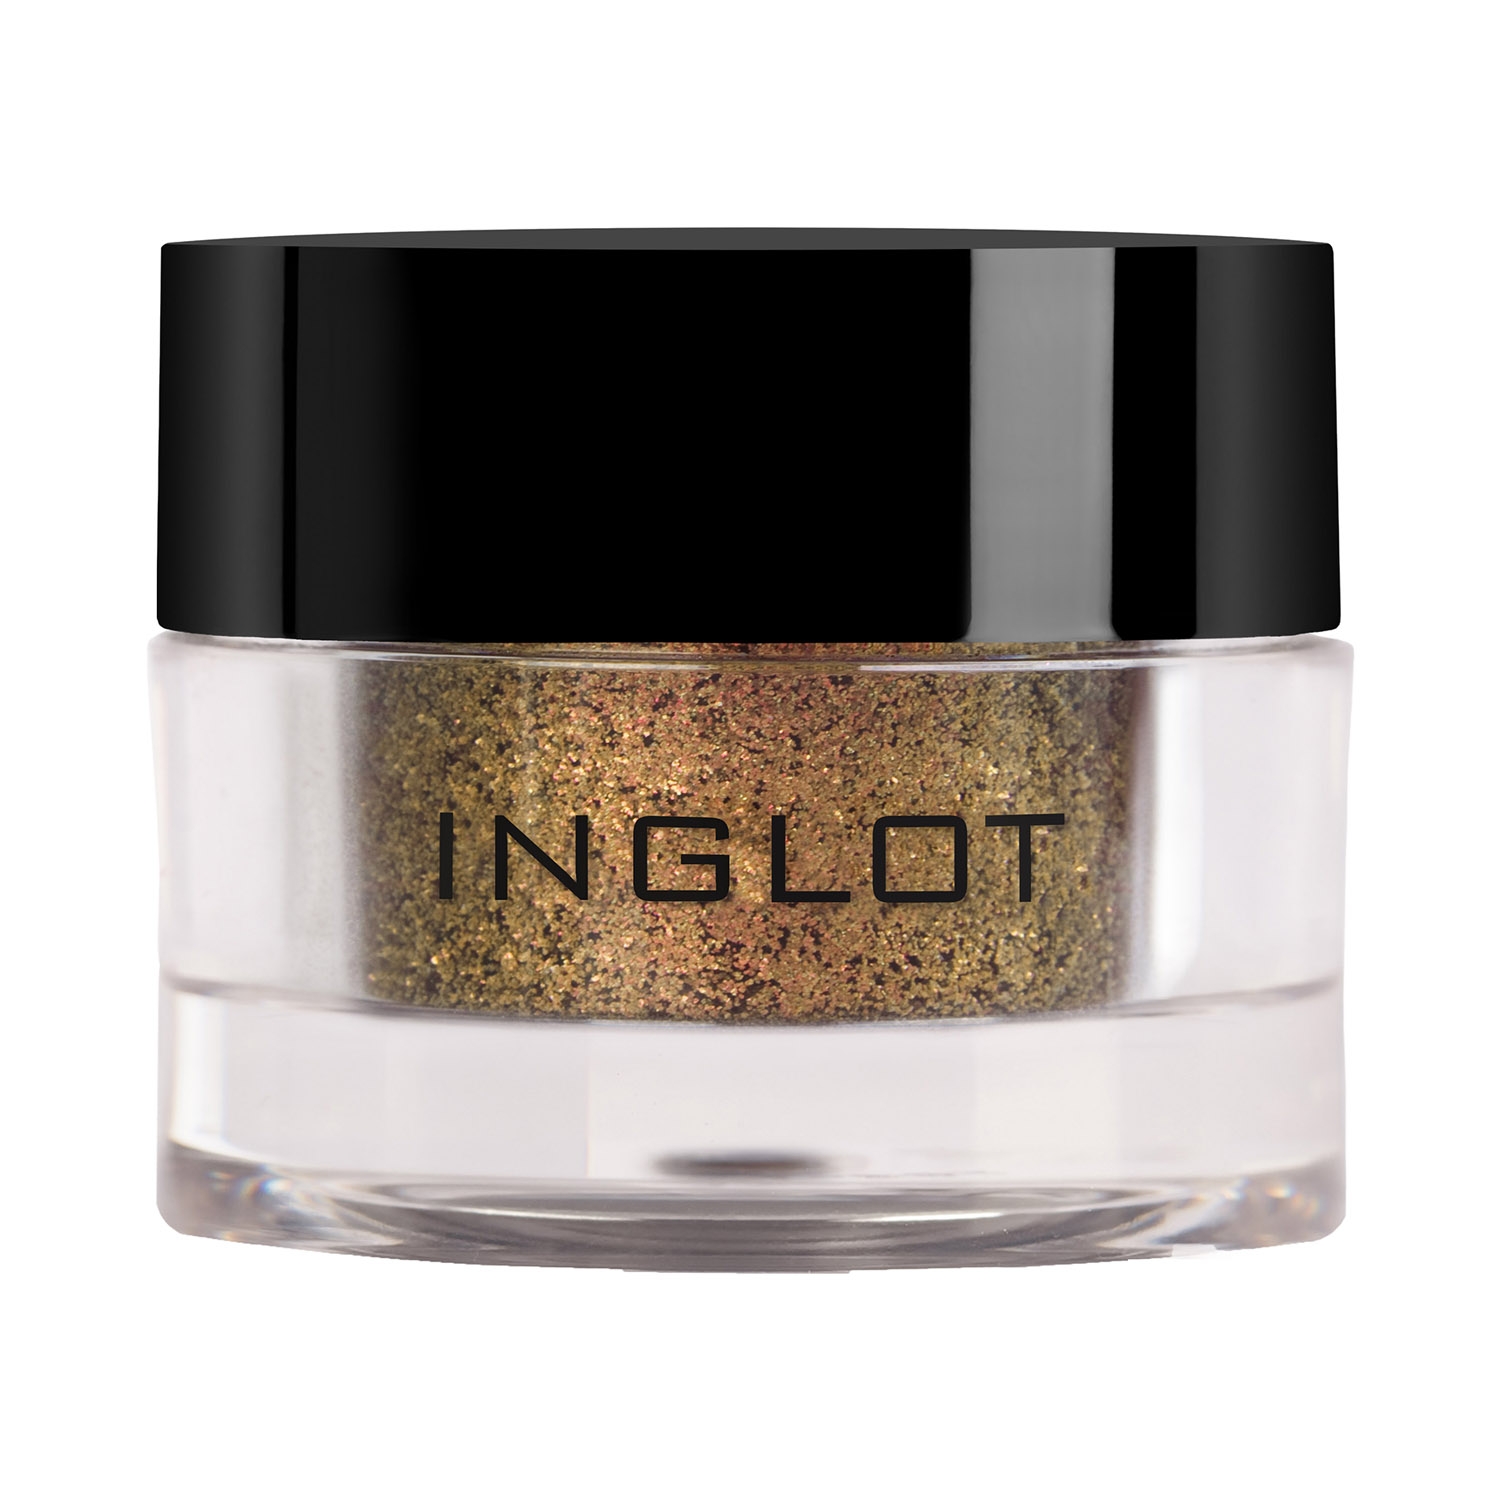 INGLOT | INGLOT Amc Pure Pigment Eye Shadow - 122 Shade (2g)